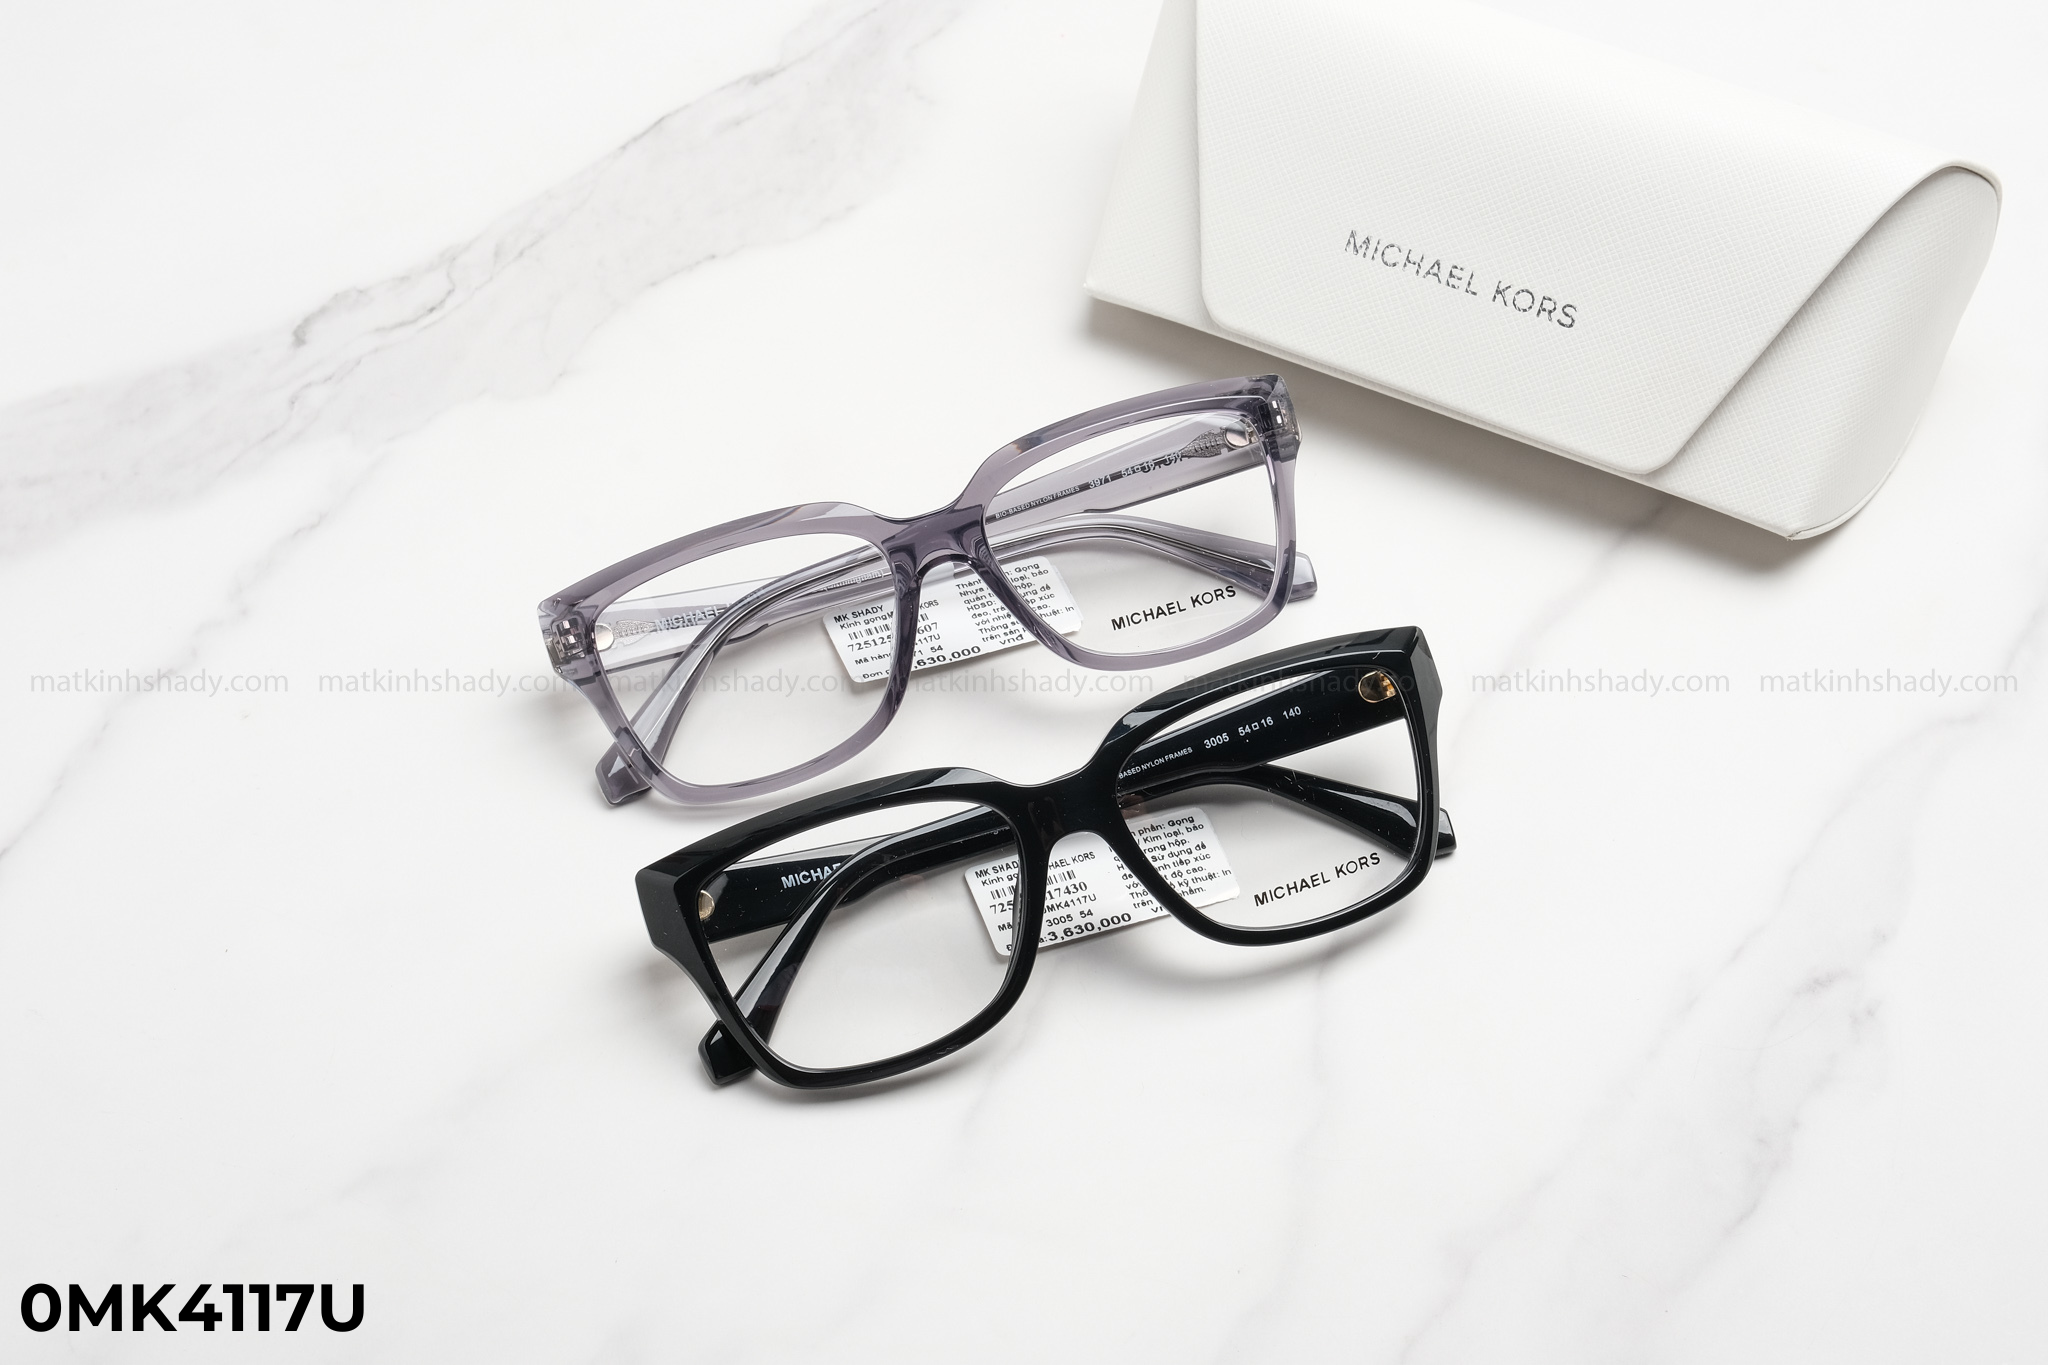  Michael Kors Eyewear - Glasses - 0MK4117U 